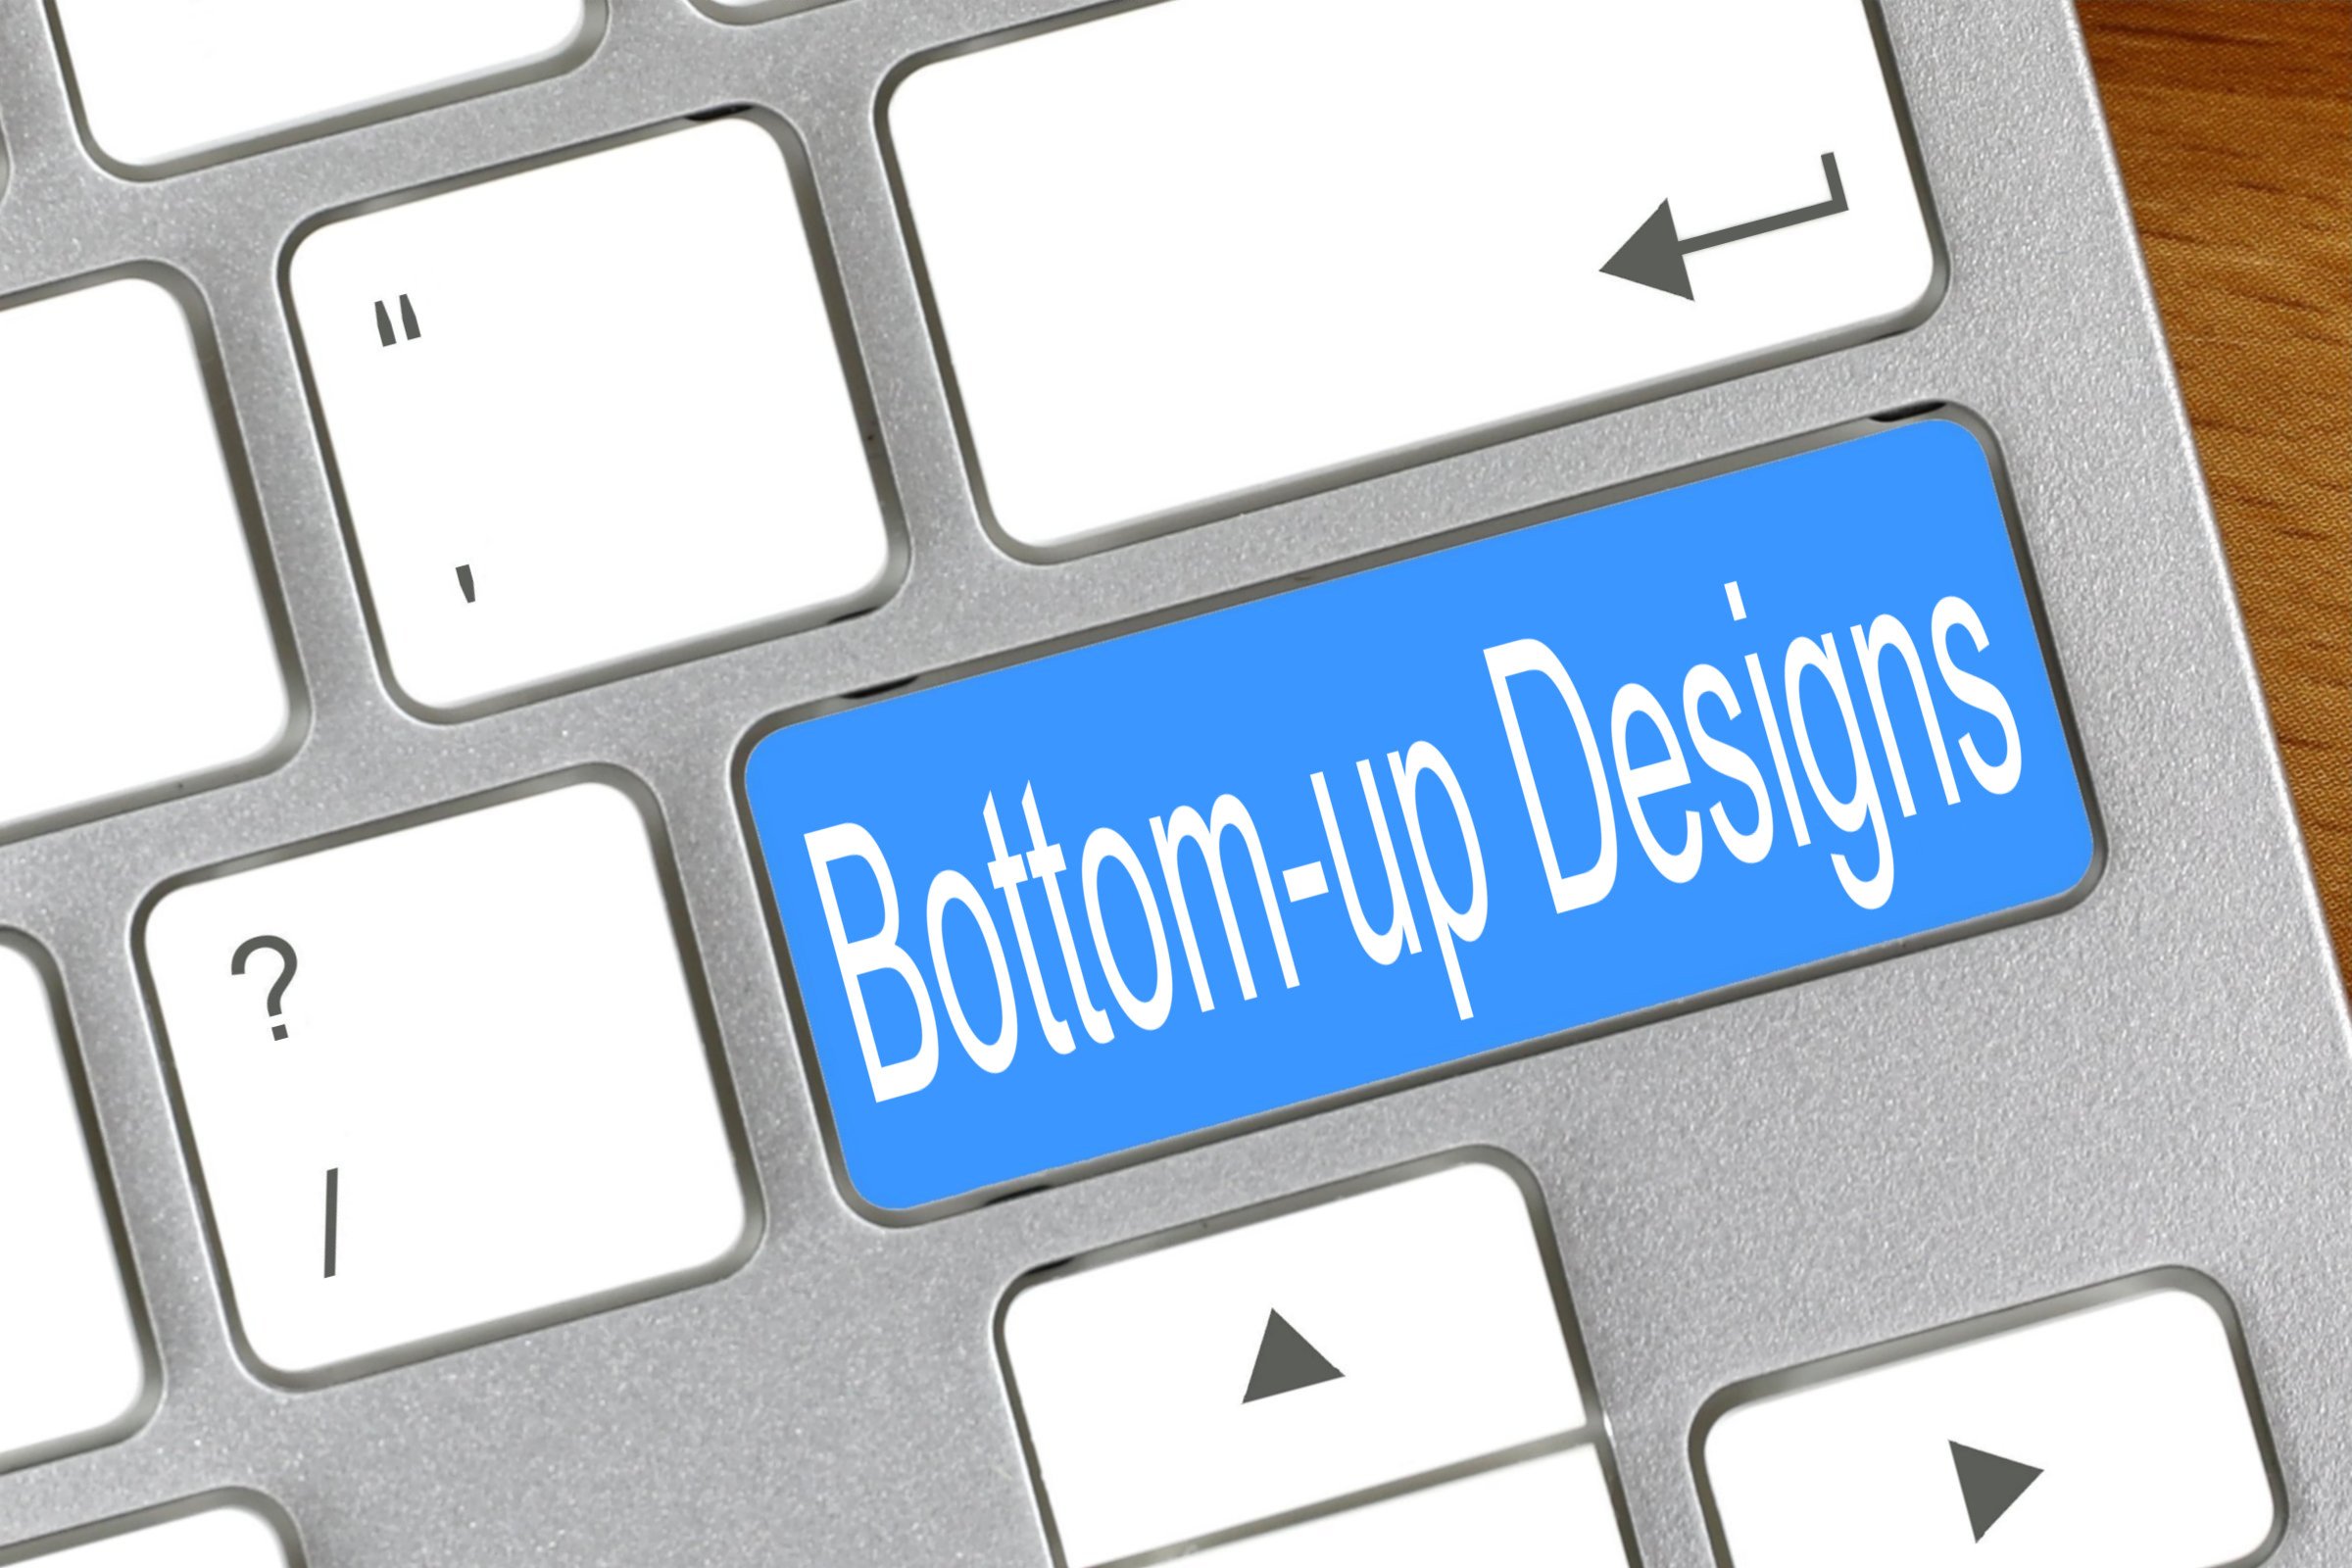 bottom up designs